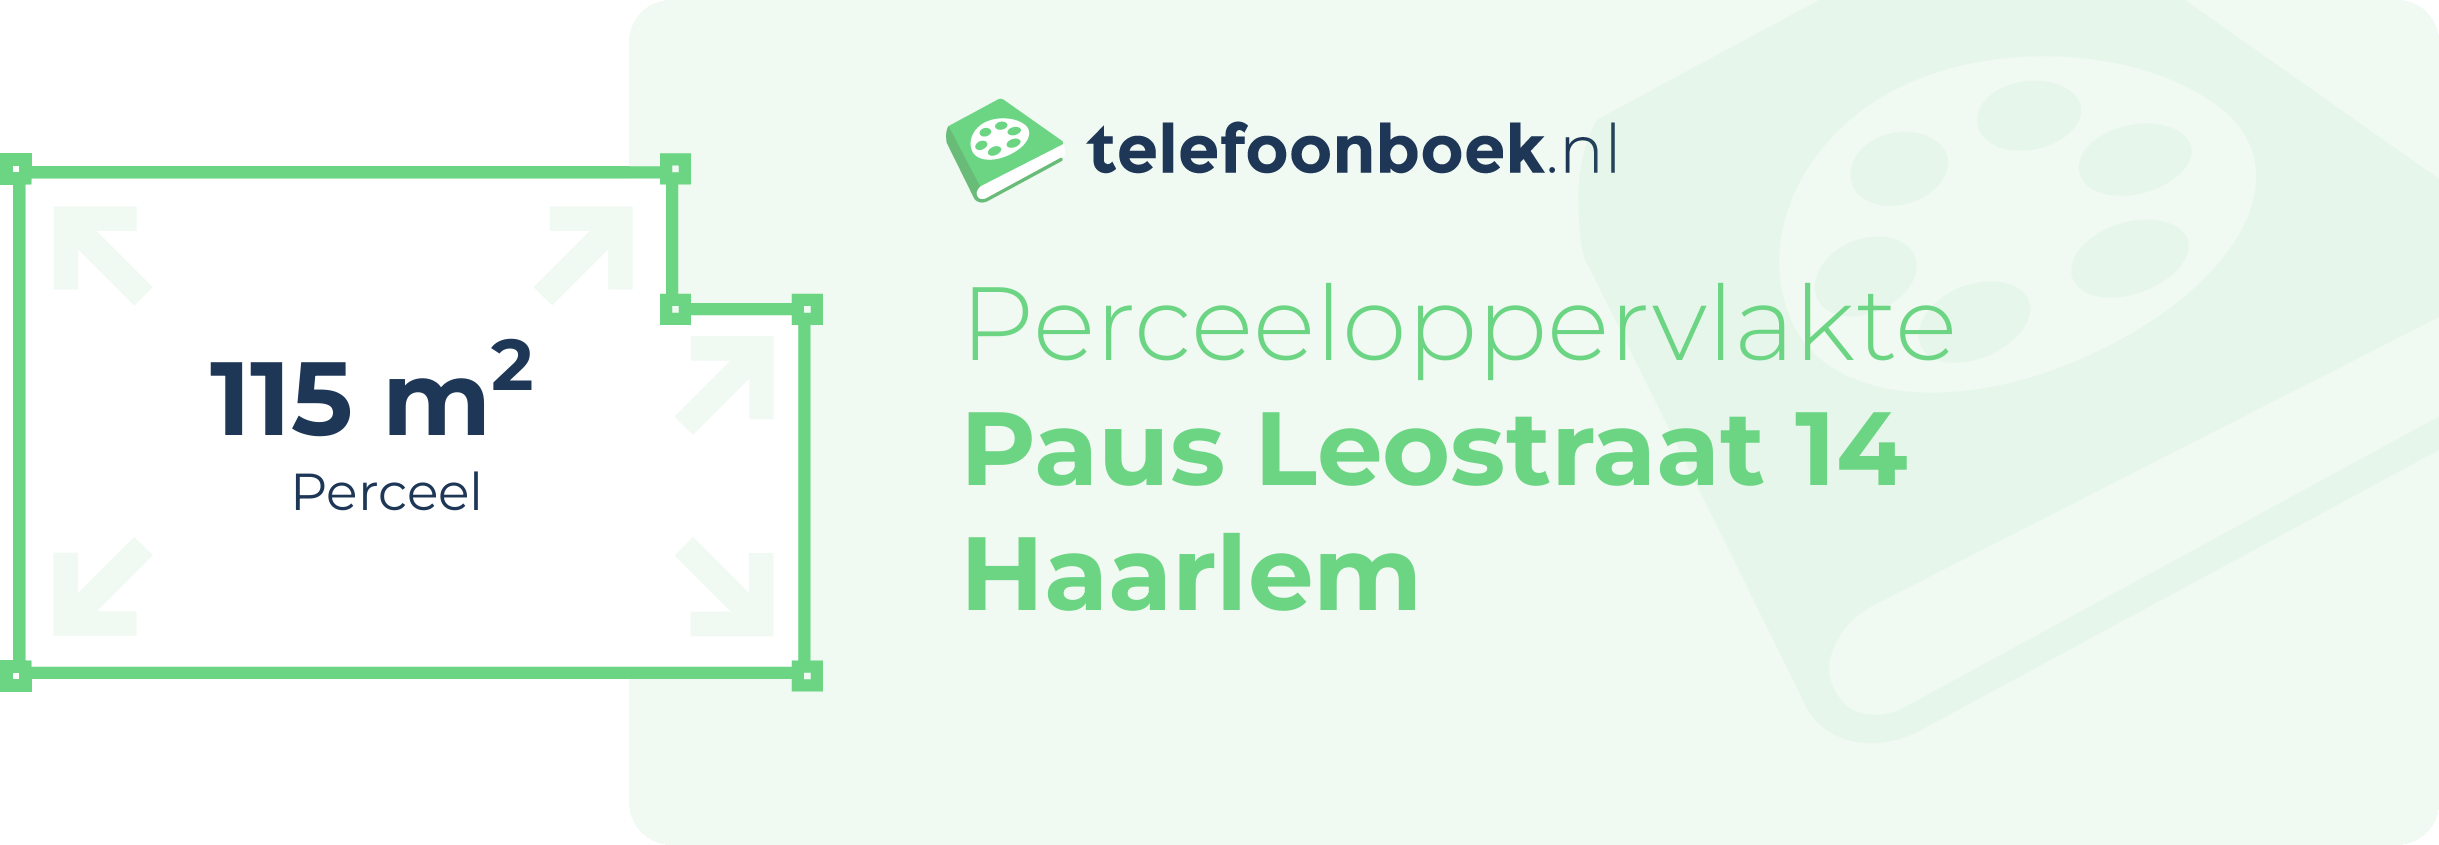 Perceeloppervlakte Paus Leostraat 14 Haarlem